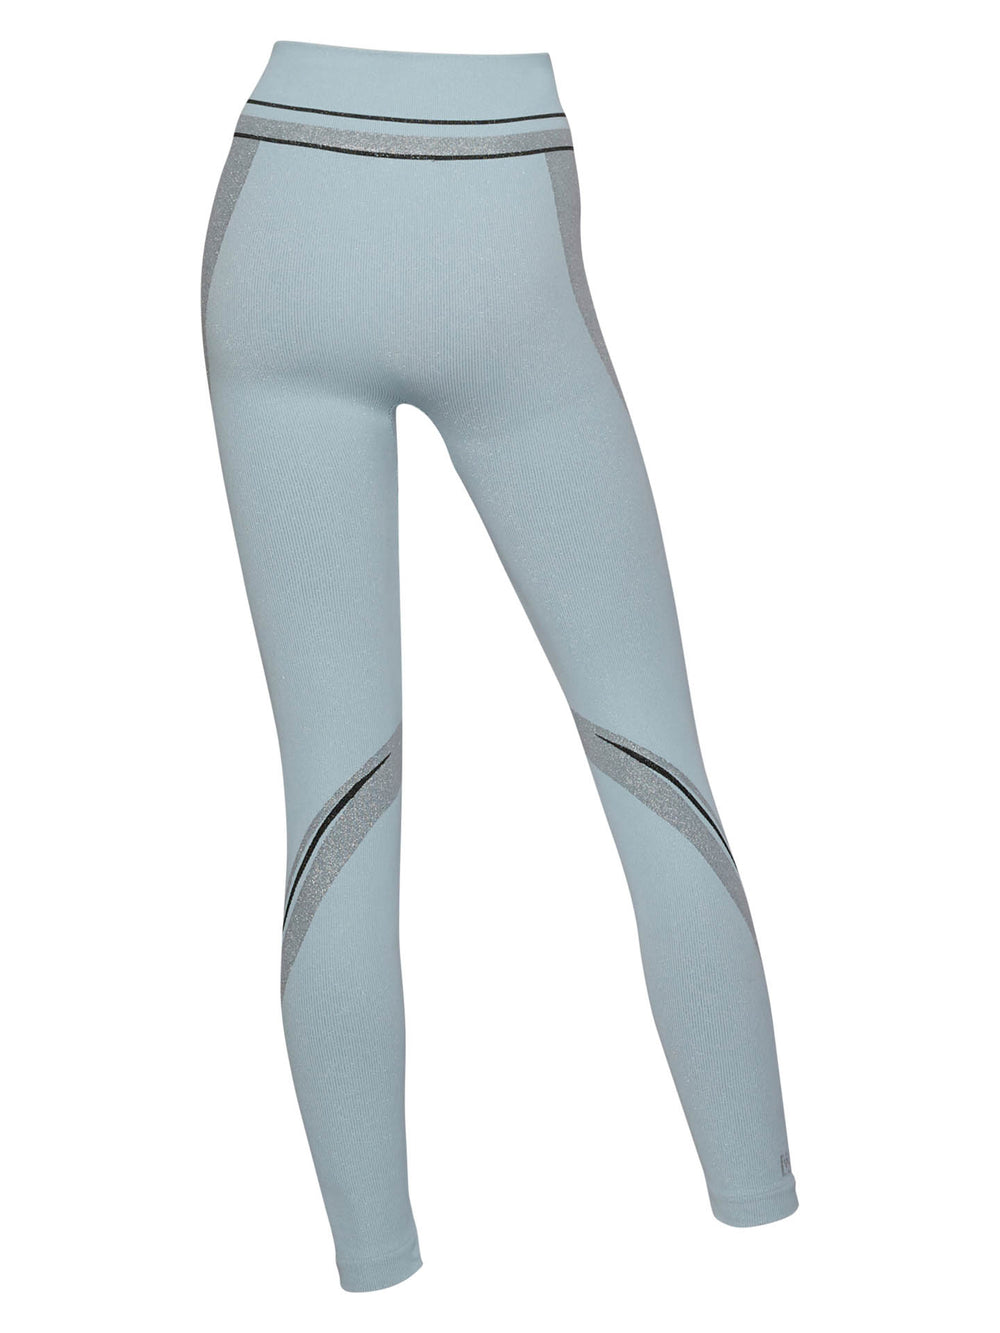 Filament Womens Running Tights (Grey/Blue)